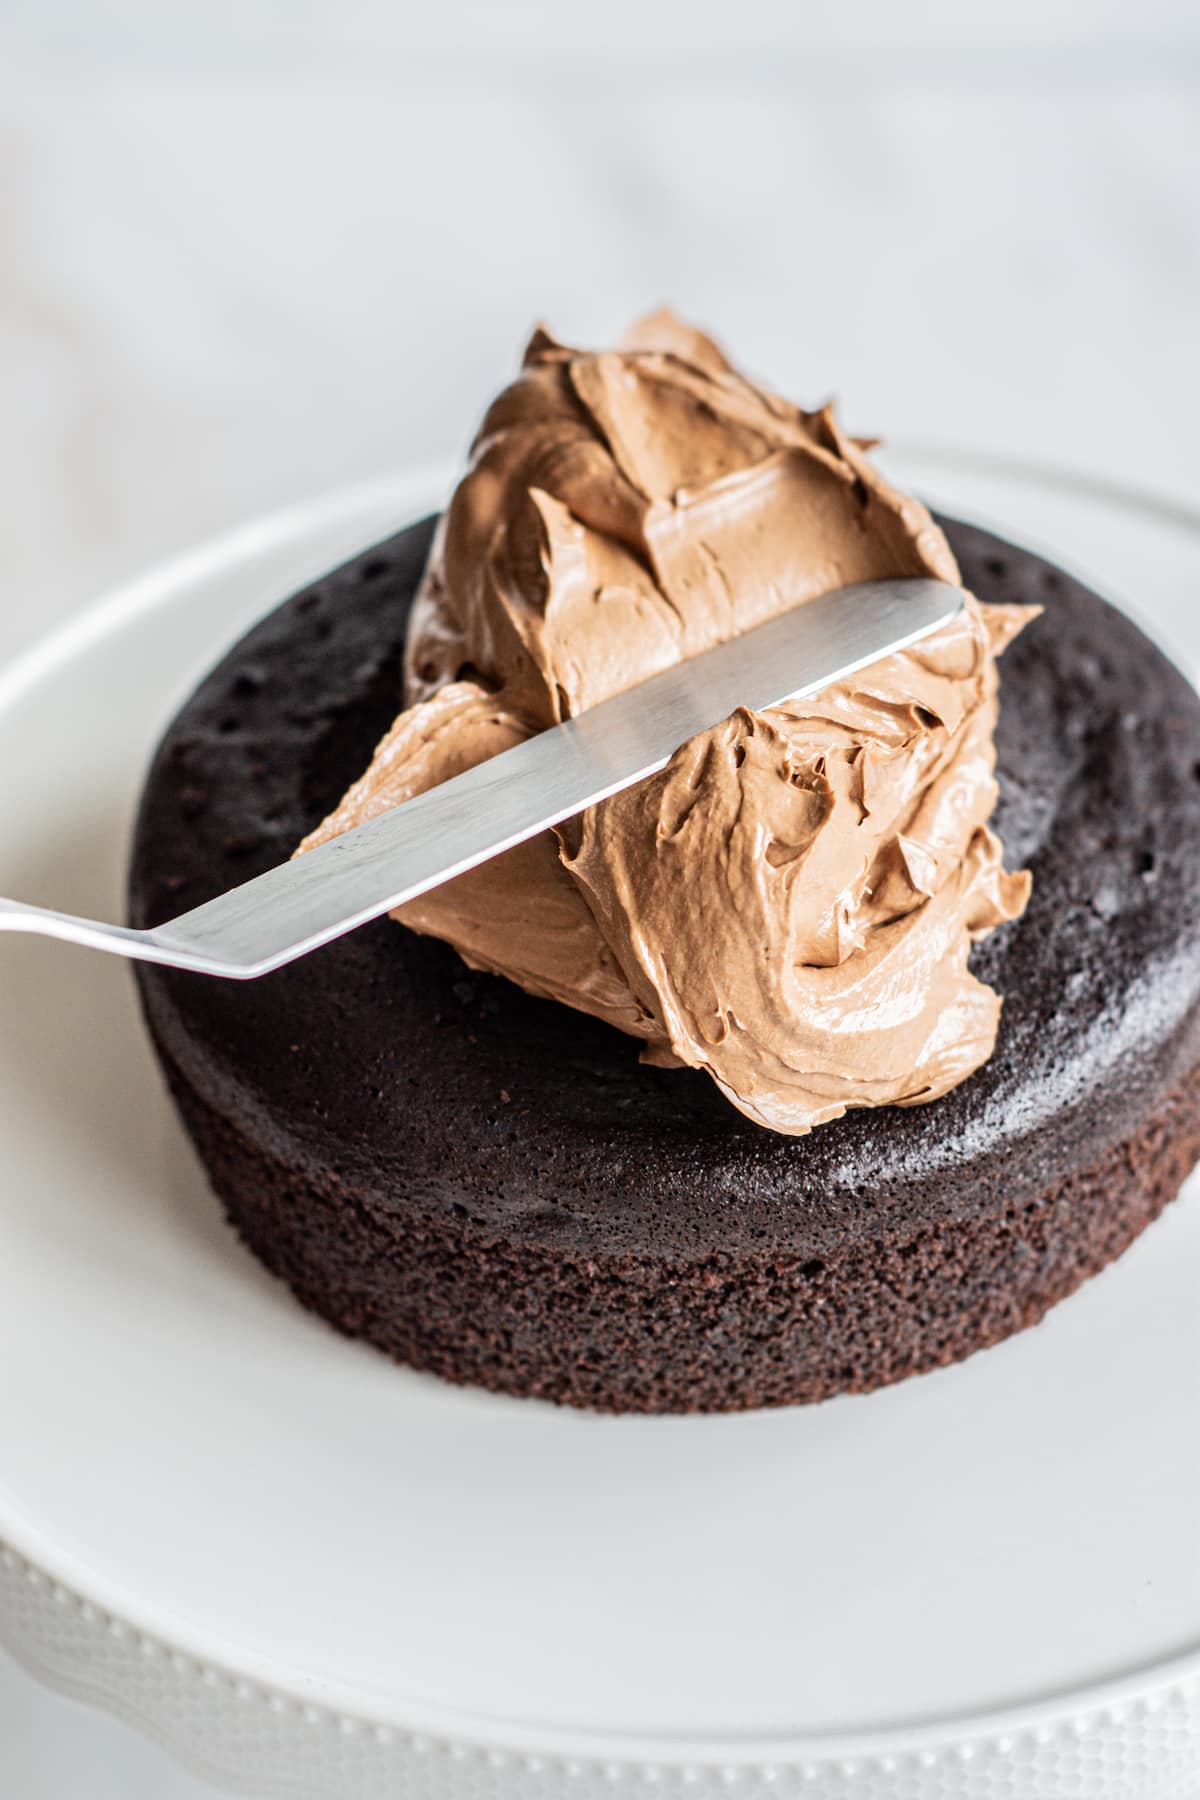 A spatula spreading swiss meringue on a chocolate cake.